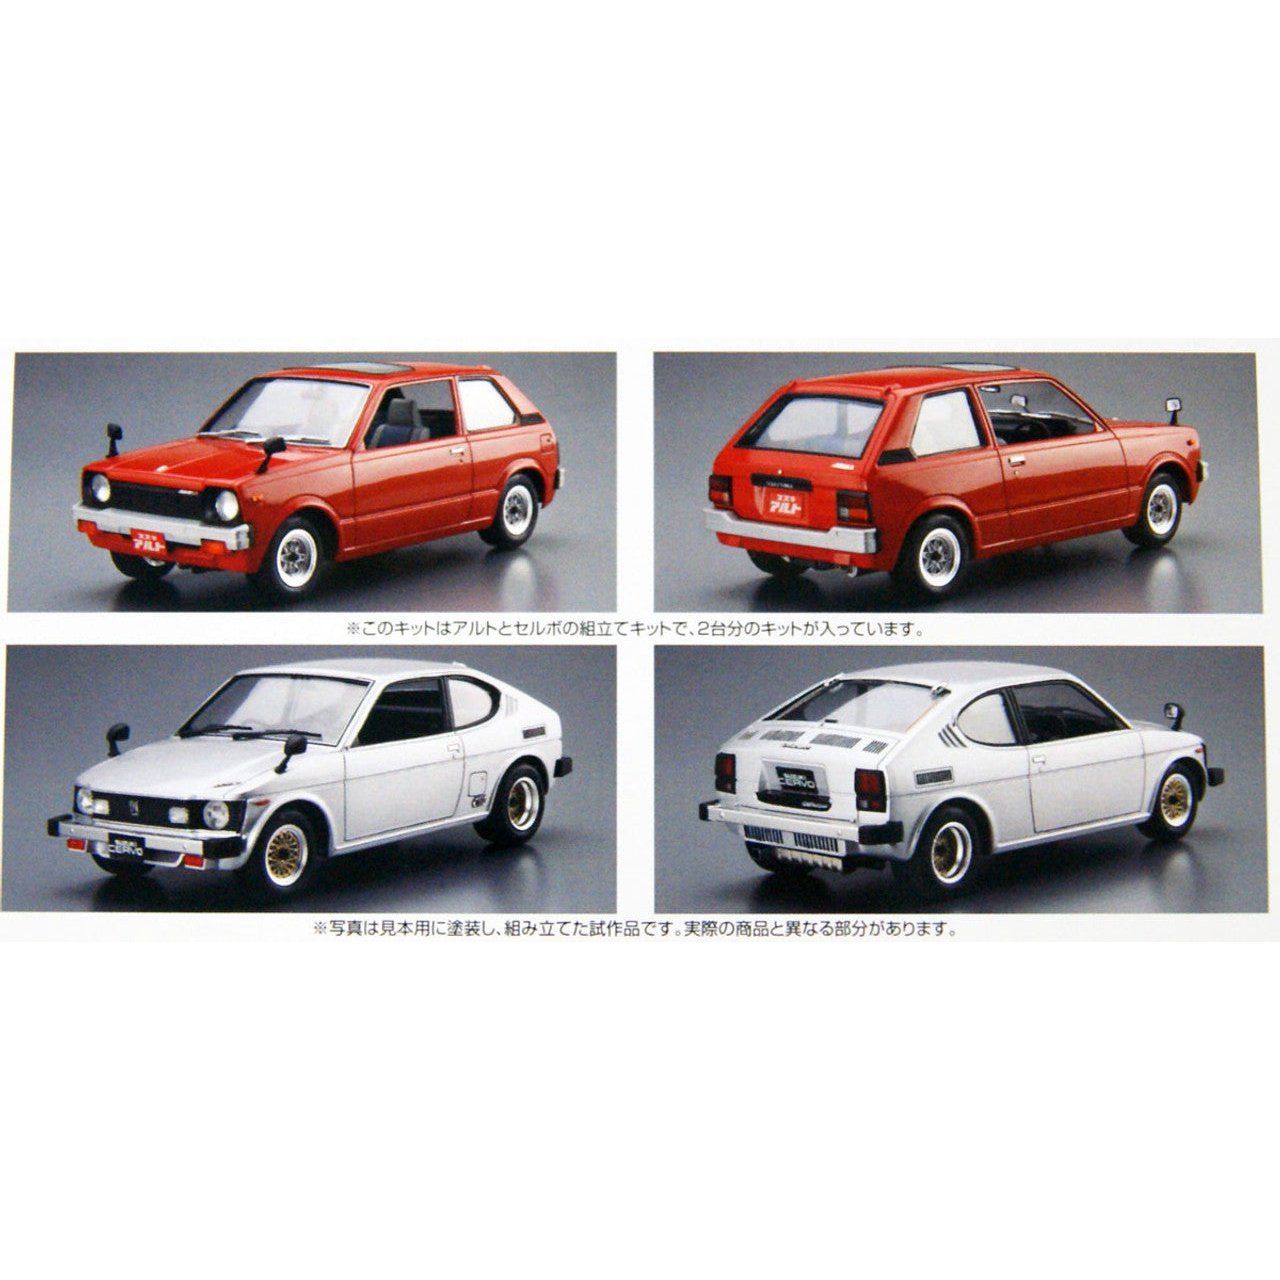 Aoshima 1/24 The Model Car Suzuki SS30V Alto / SS20 Cervo '79 組裝模型 - TwinnerModel